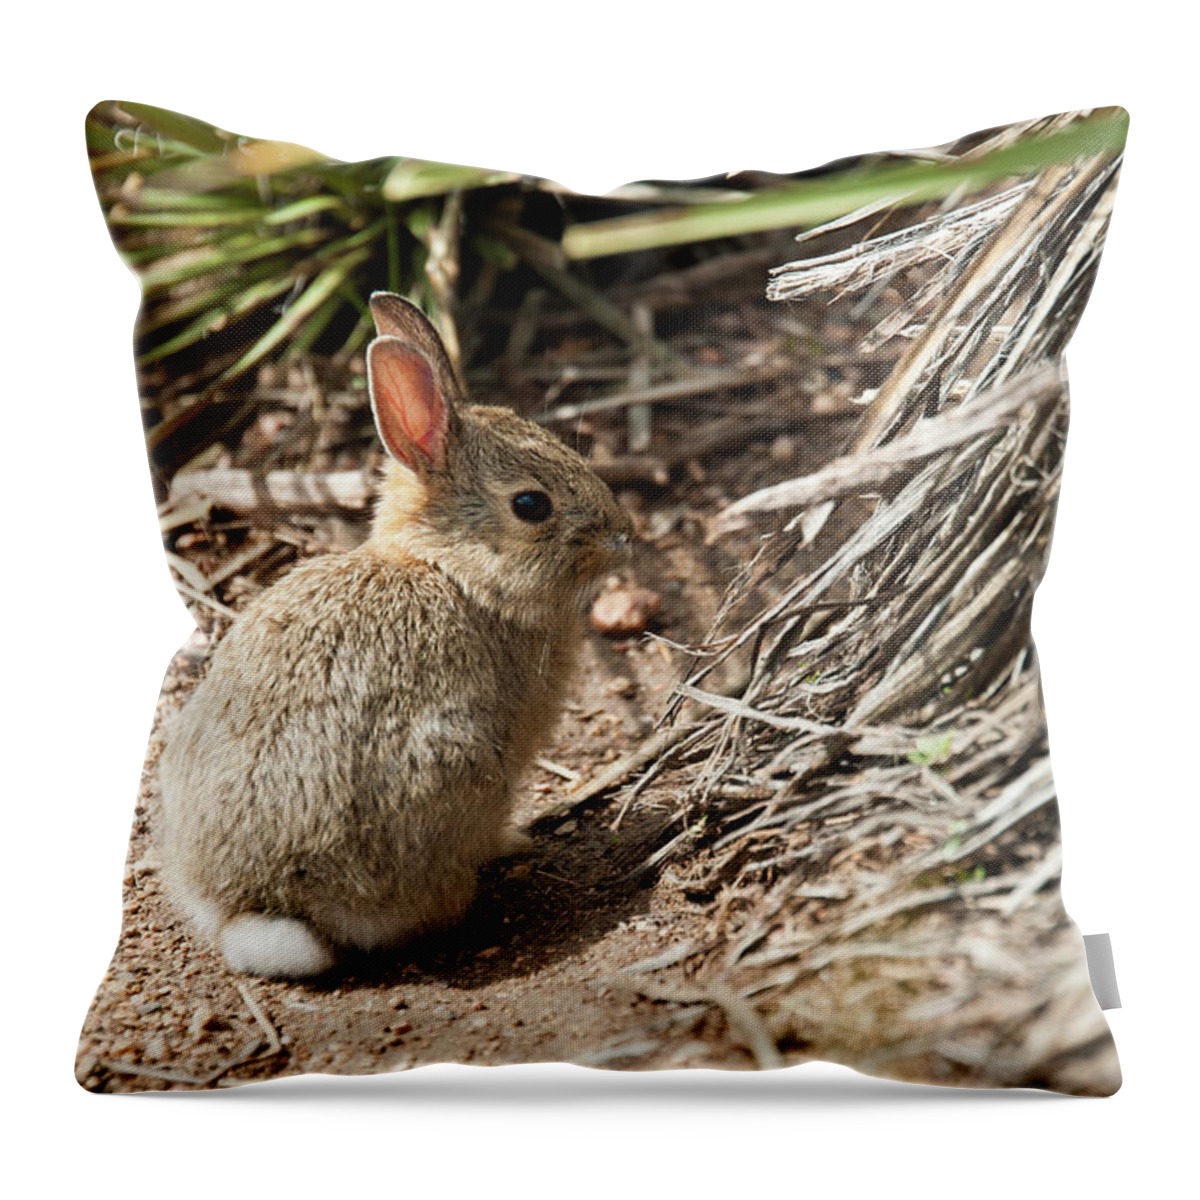 Colorado Throw Pillow featuring the photograph Baby Bunny by Tara Krauss